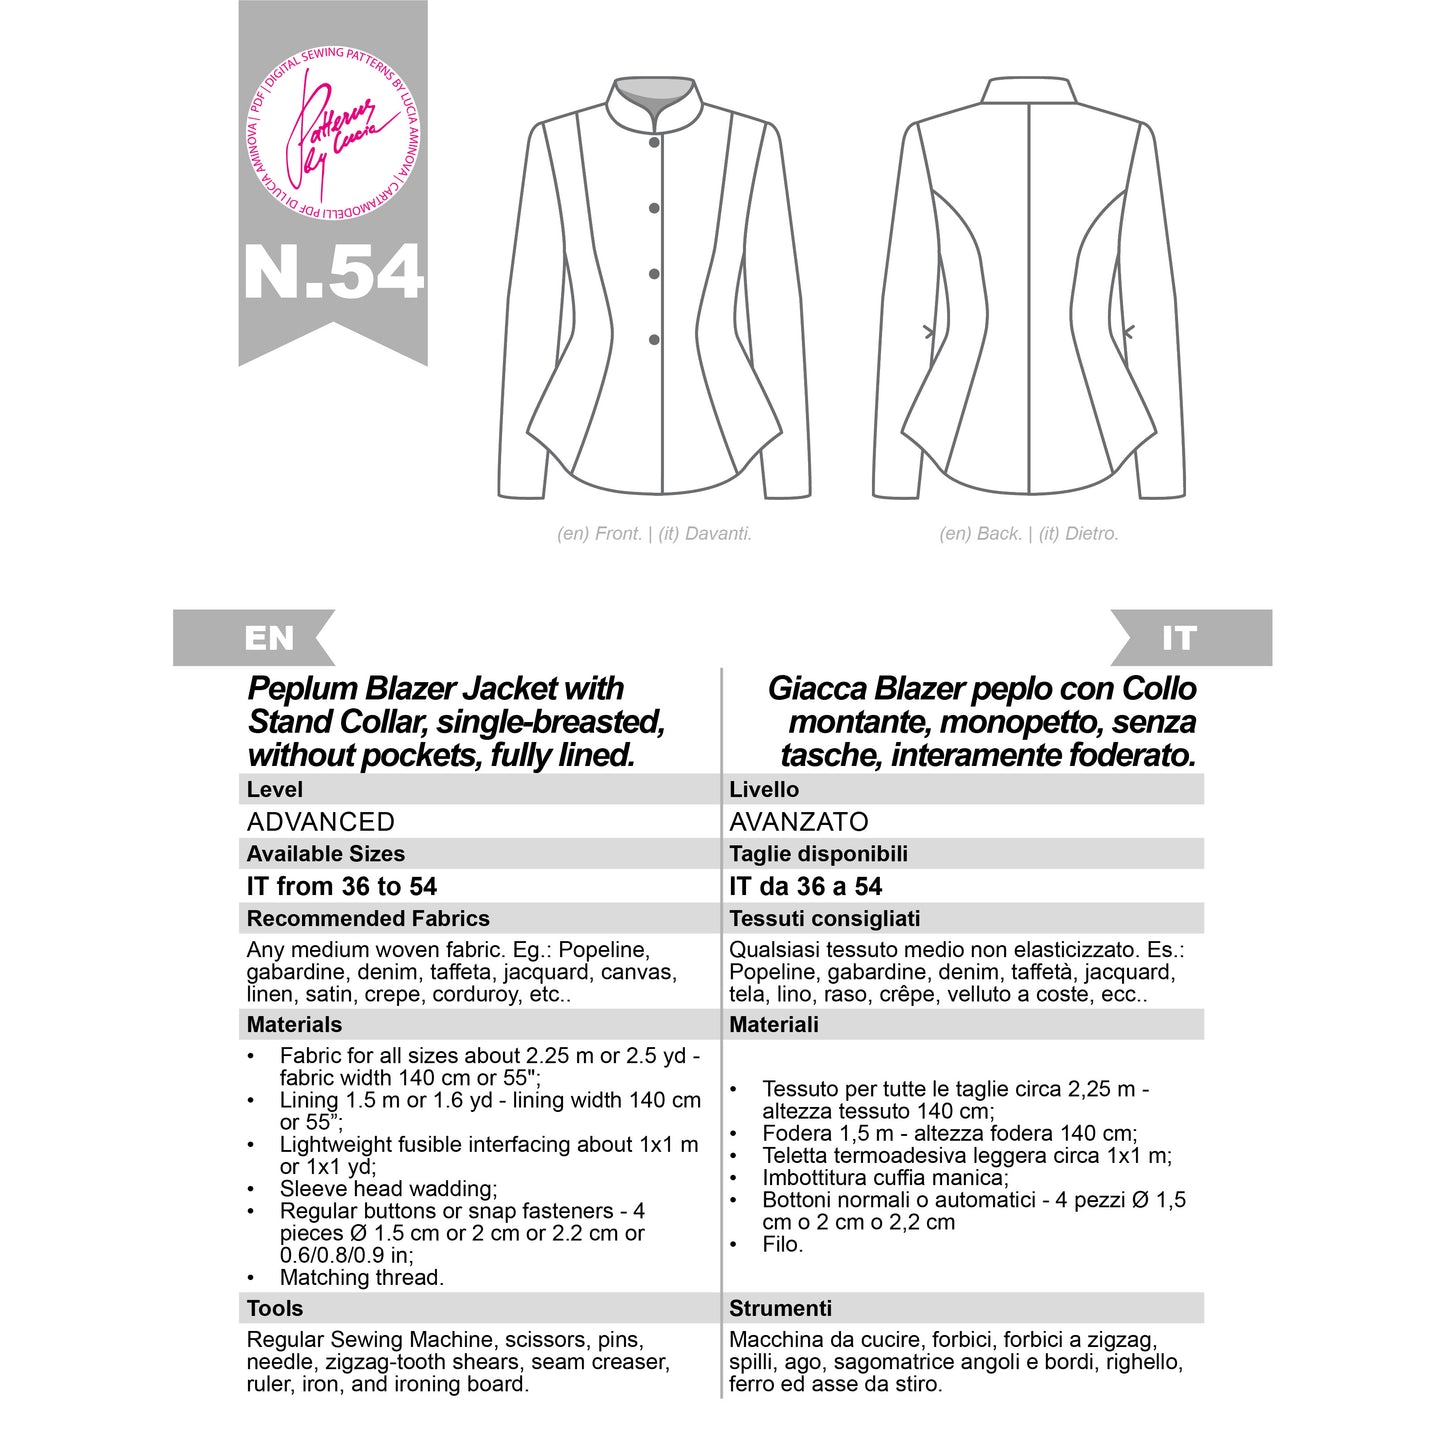 Peplum Blazer Jacket with Stand Collar Sewing Pattern N.54